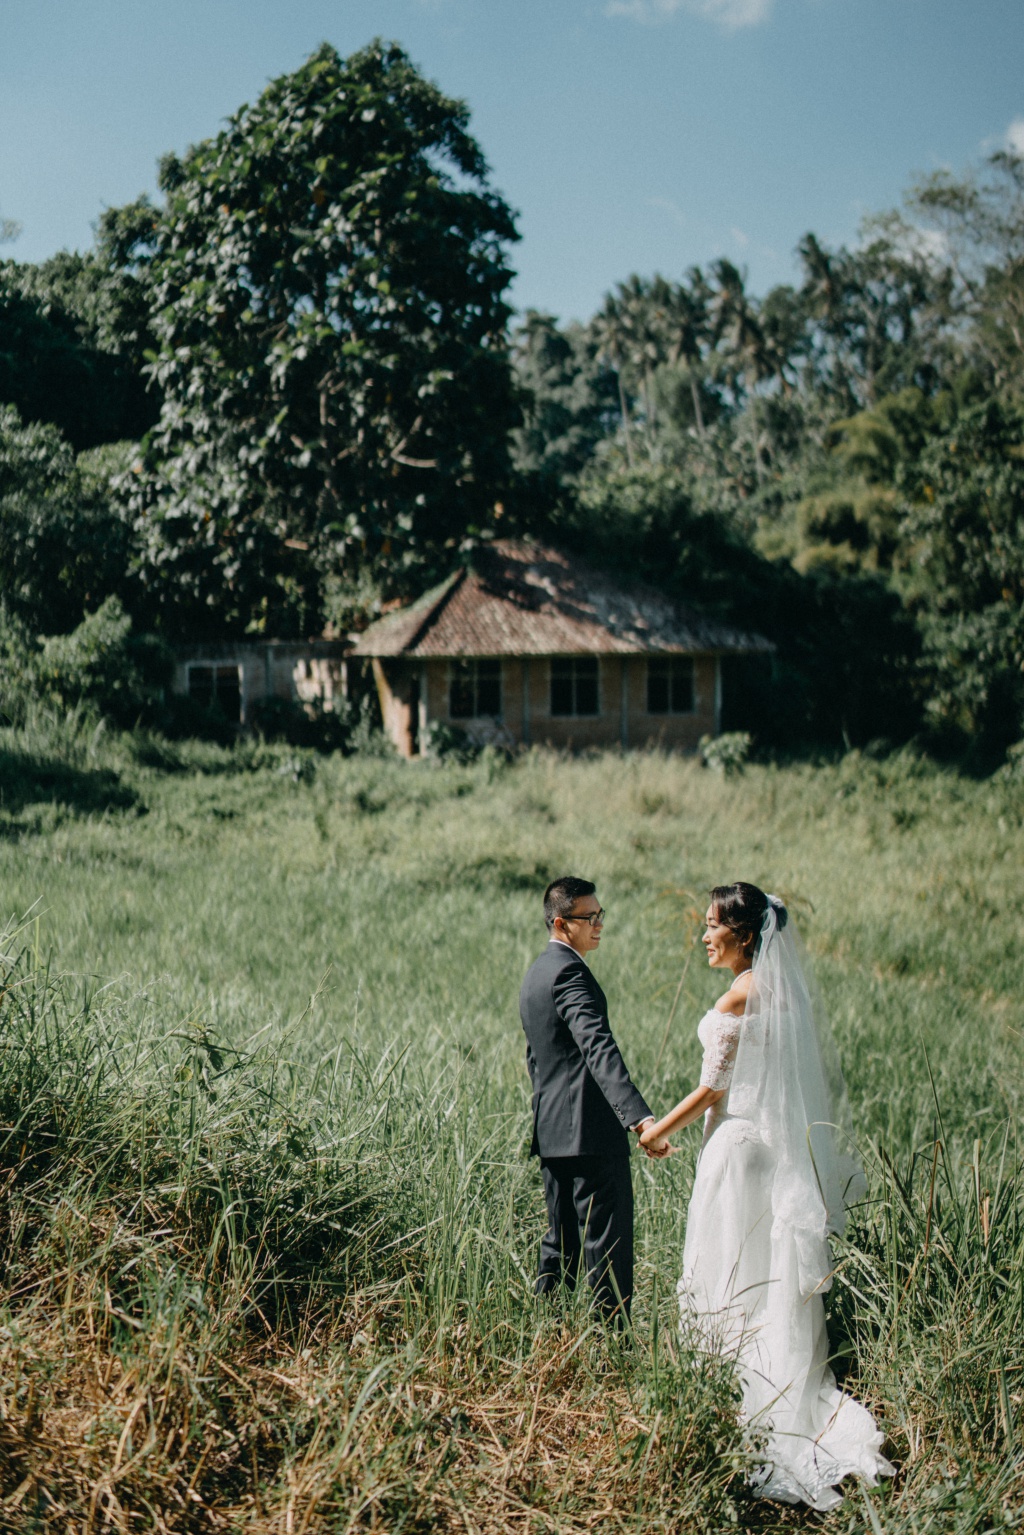 Bali Destination Pre-Wedding Photoshoot At Campuhan Ridge Walk  by Agus  on OneThreeOneFour 0